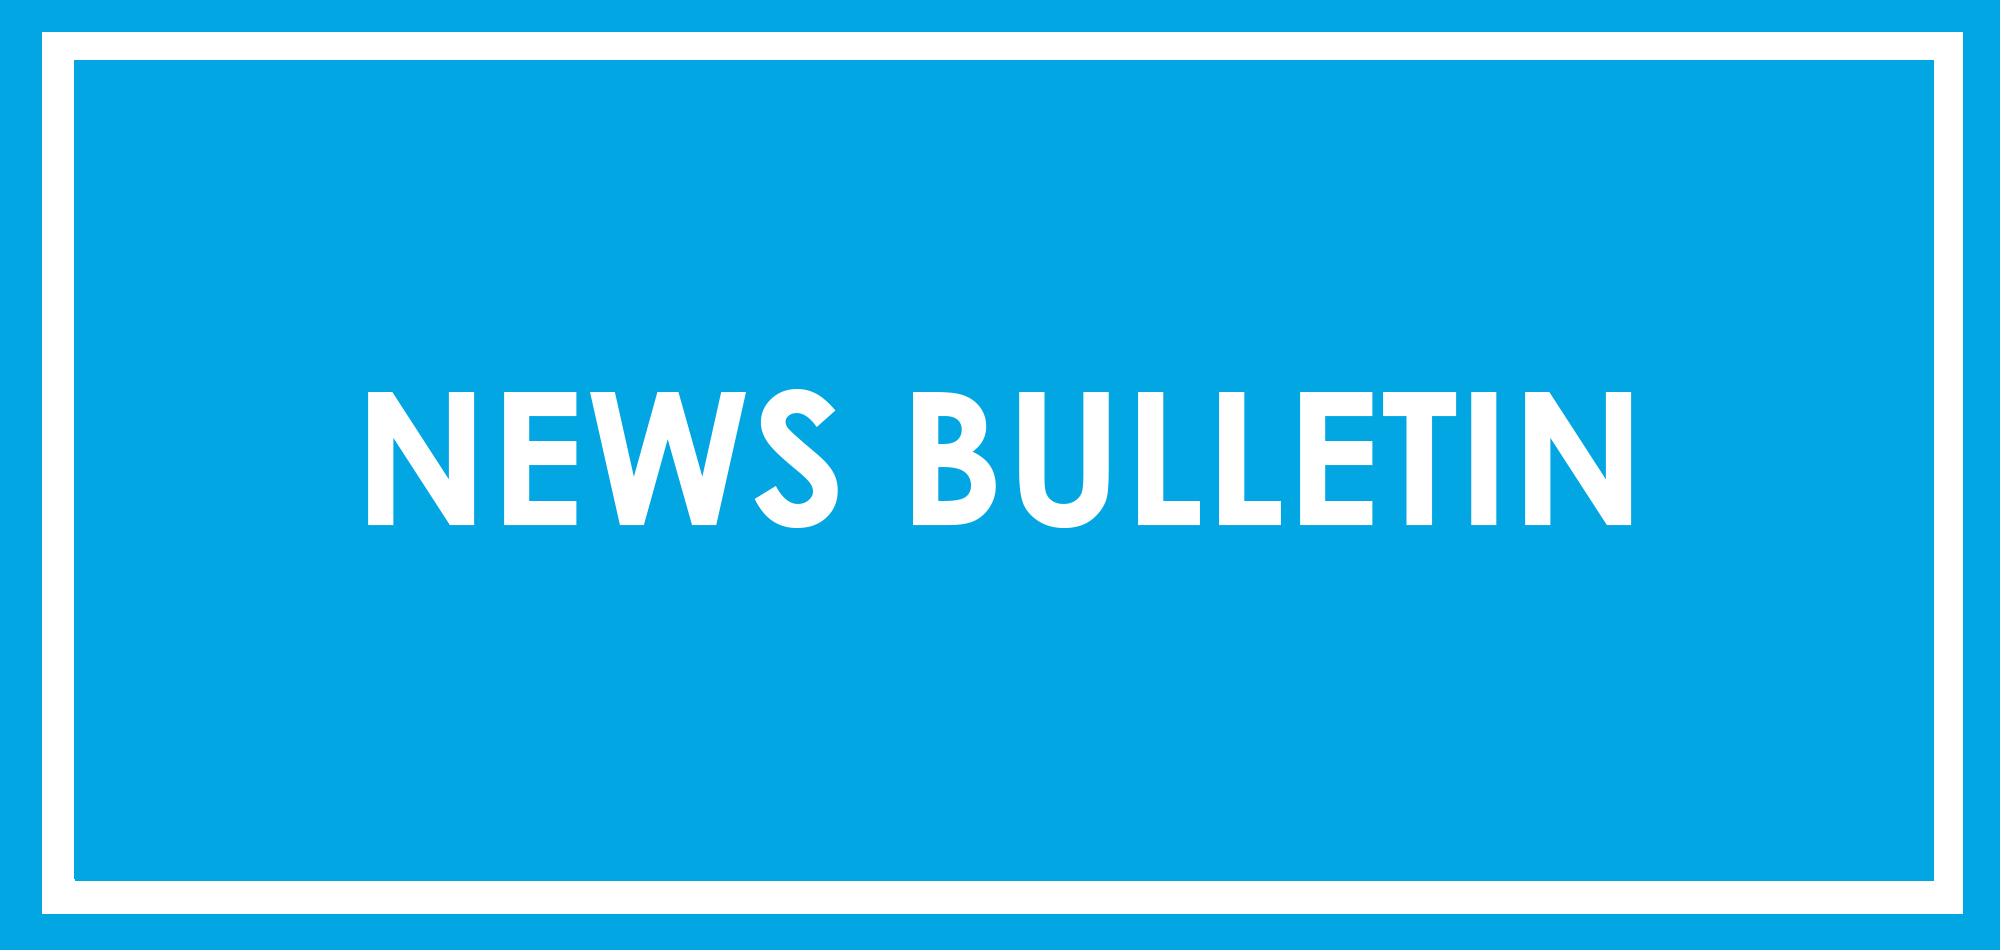 News Bulletin - 01.07.20